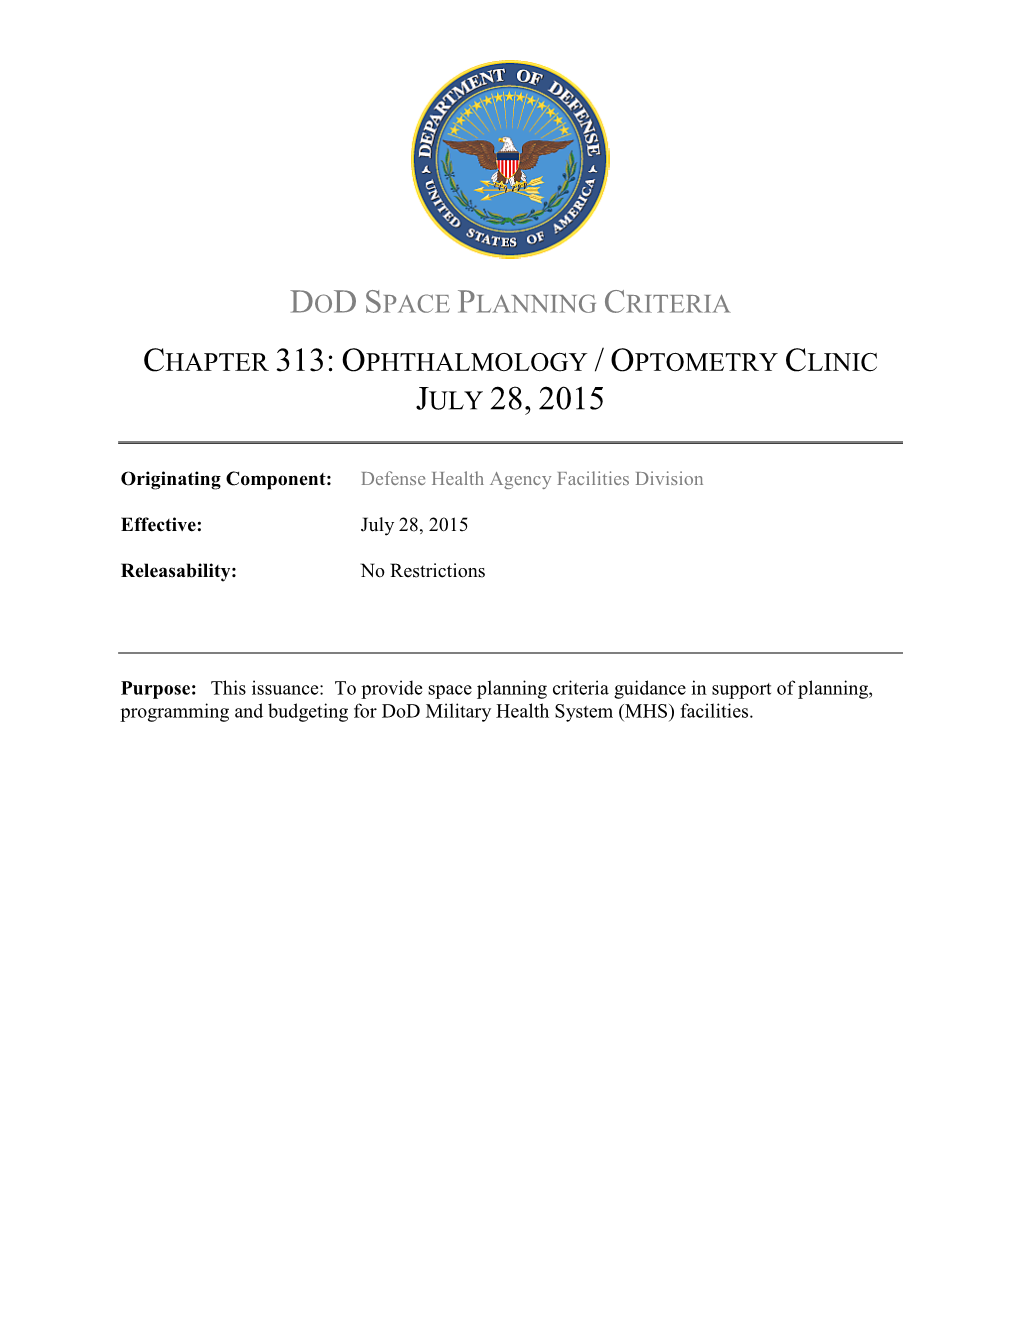 Ophthalmology / Optometry Clinic July 28, 2015